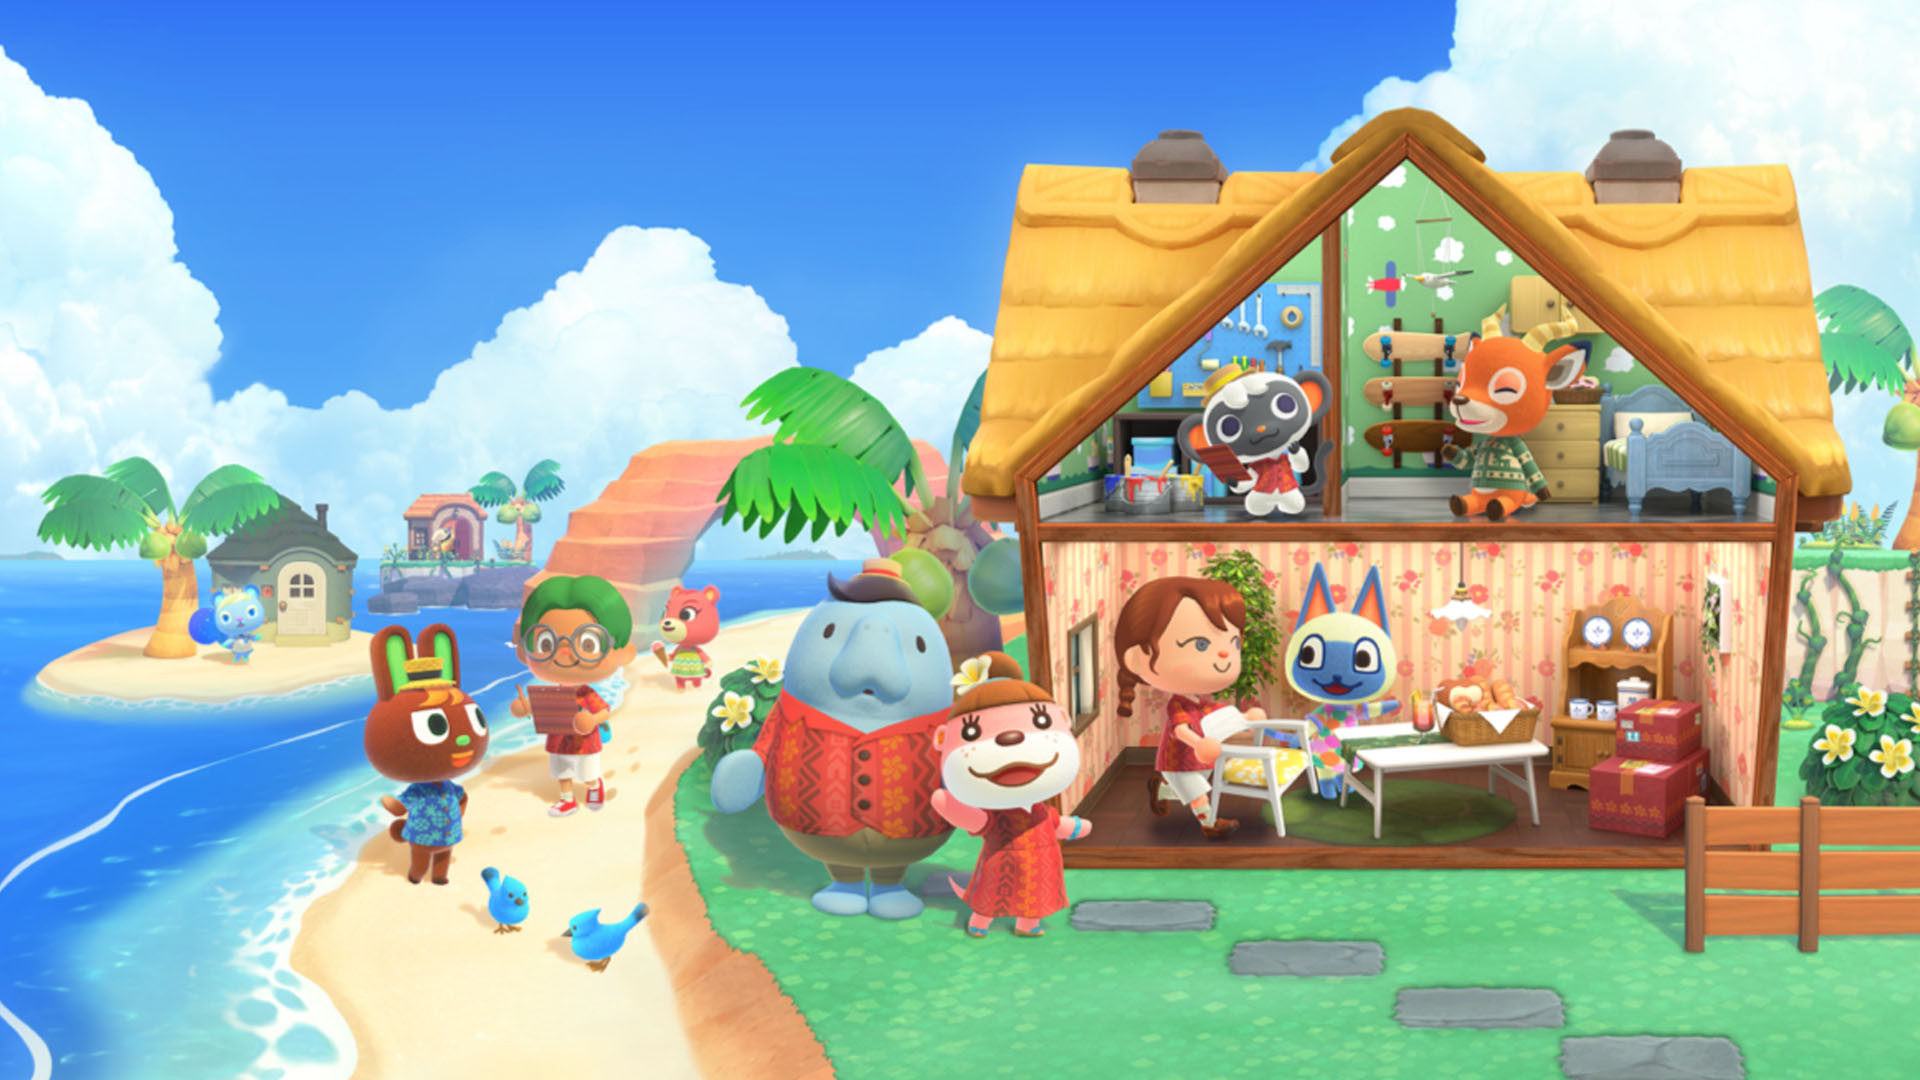 Peut-on utiliser un cheat code sur Animal Crossing : New Horizons ?